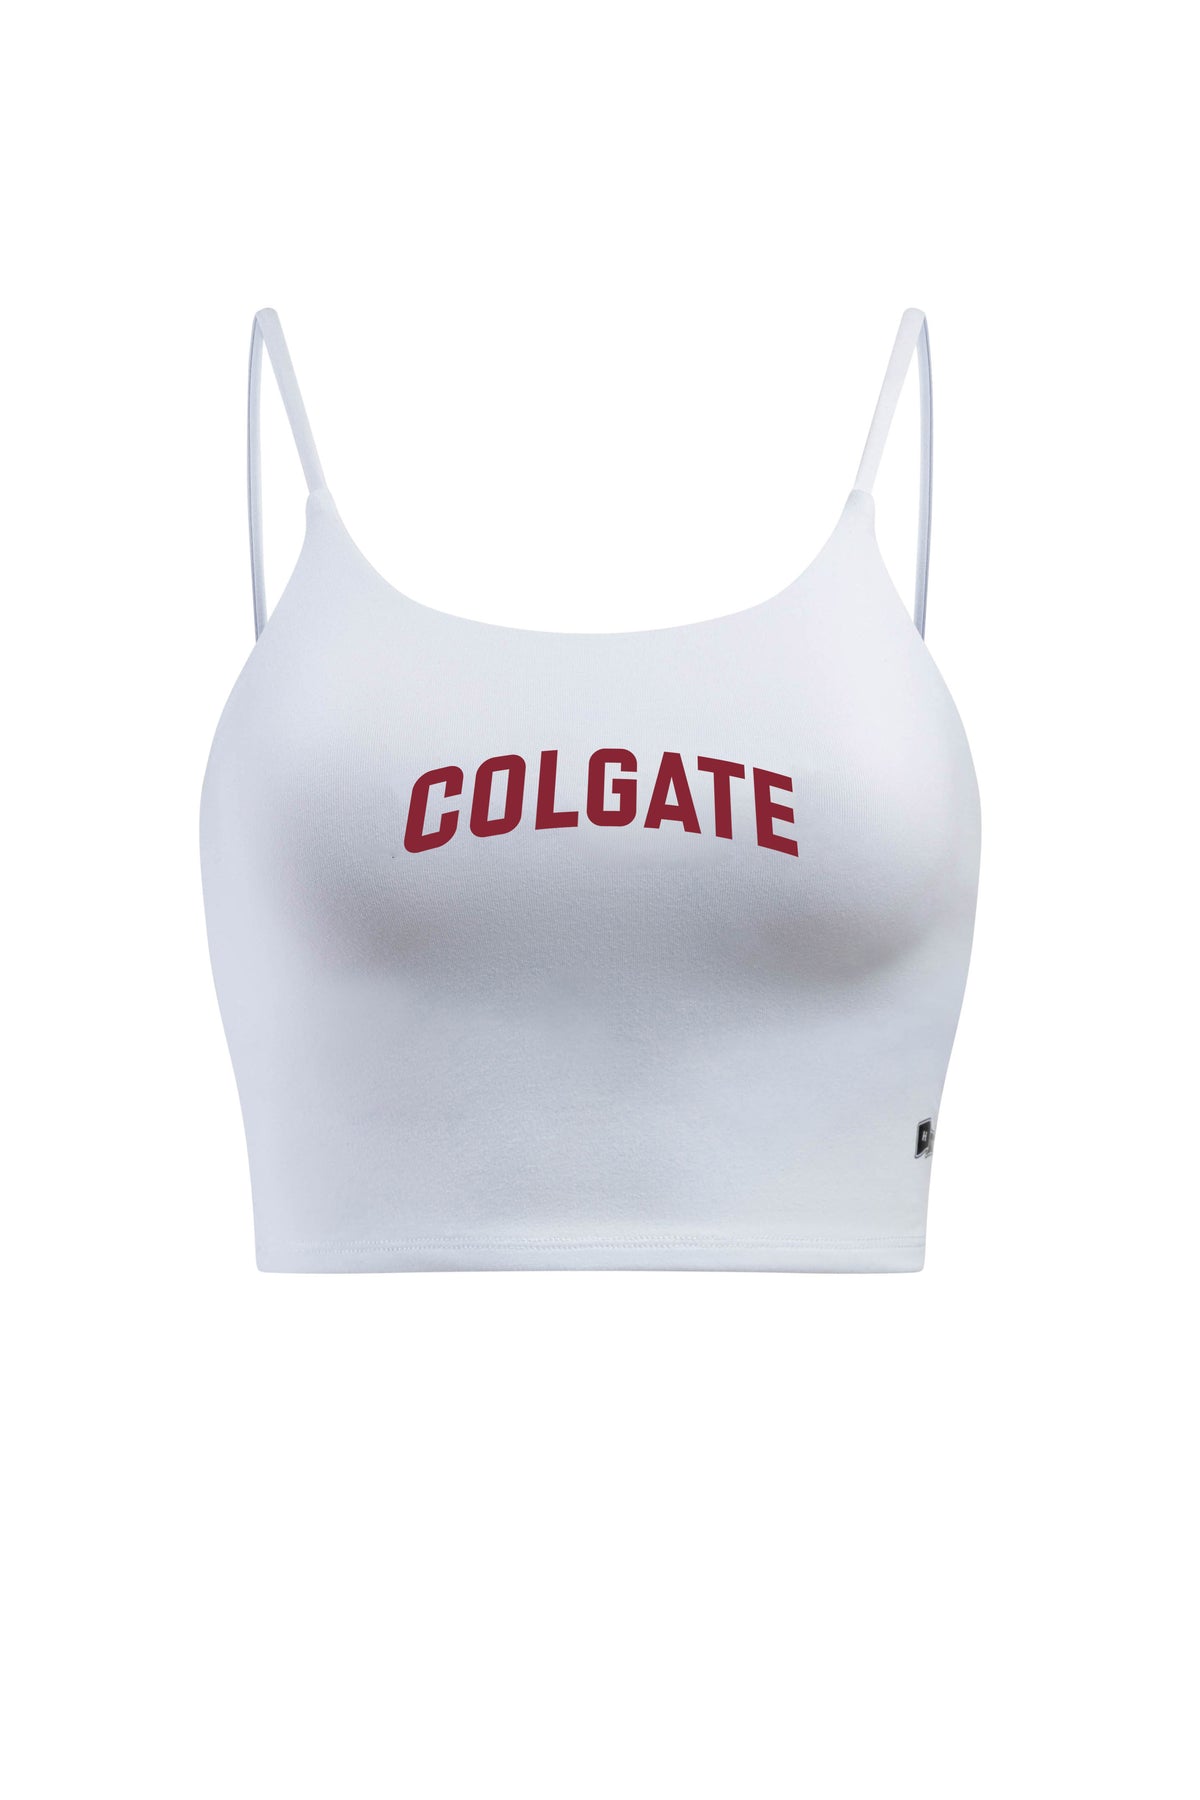 Colgate University Bra Tank Top